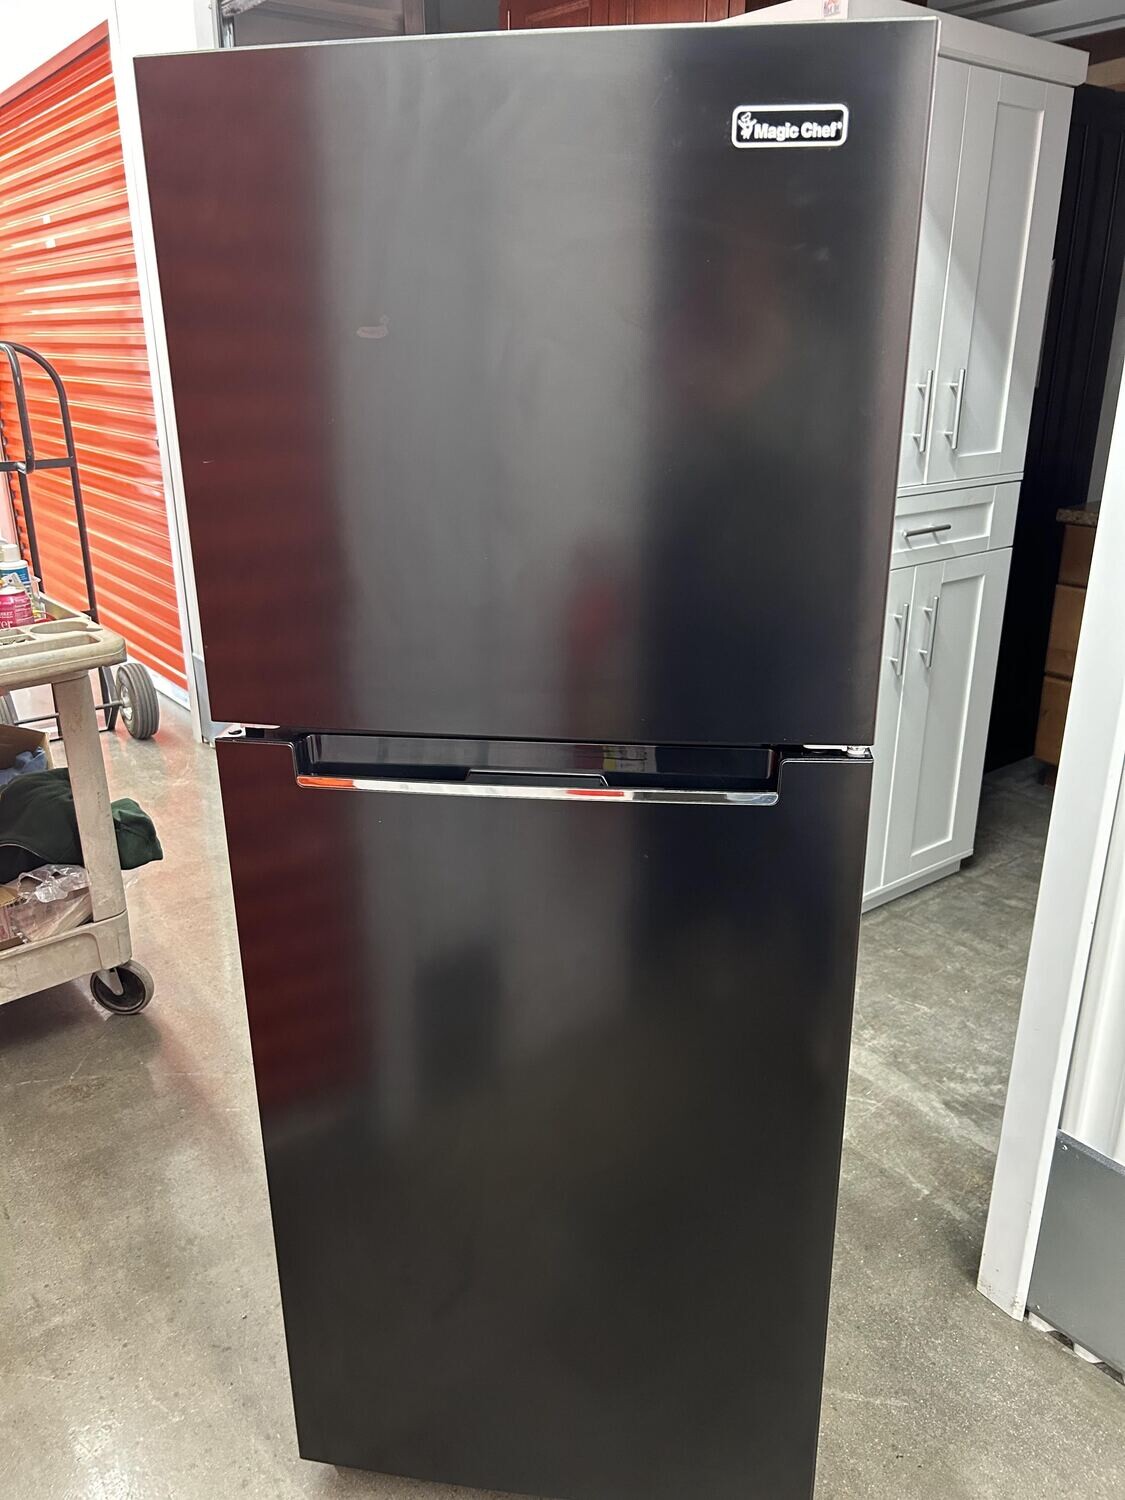 ** Black Magic Chef Apartment Size Refrigerator #1172